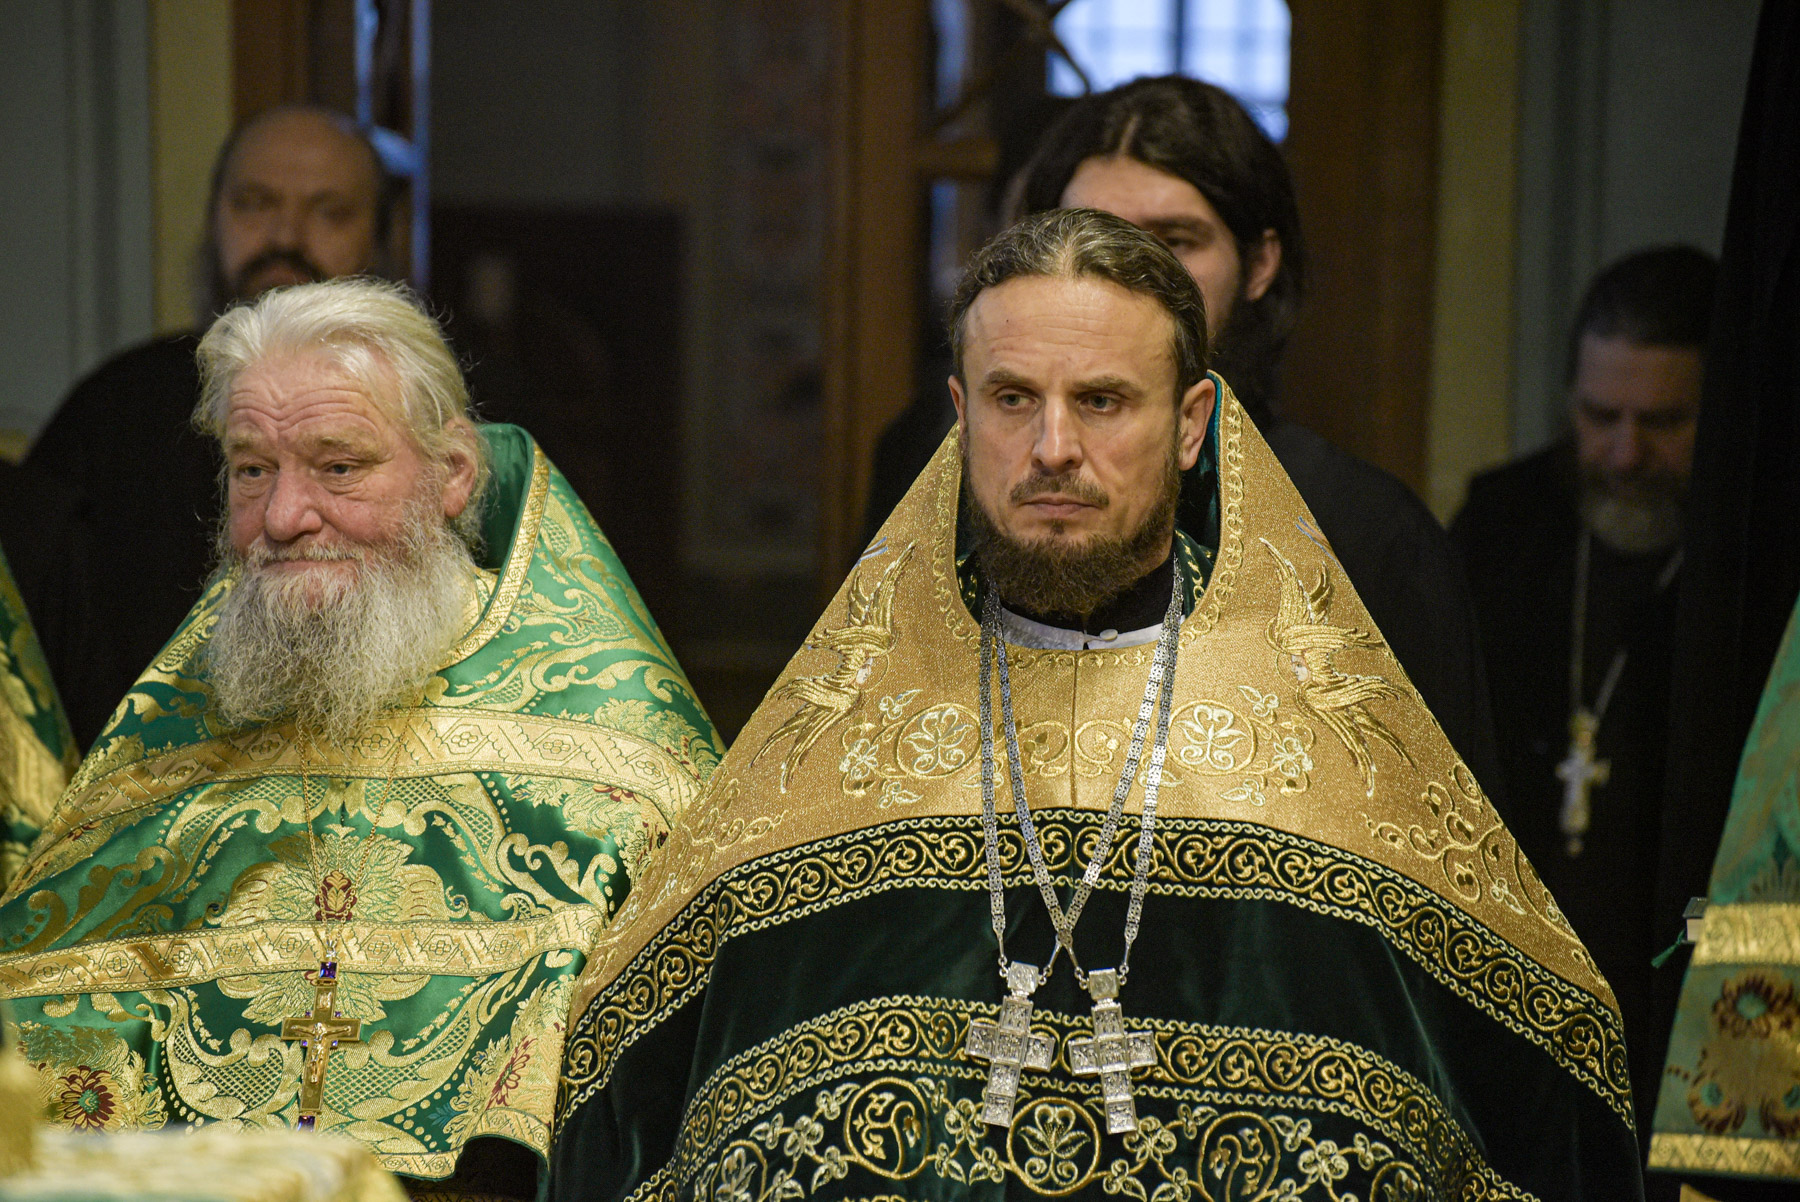 photos of orthodox christmas 0180 2